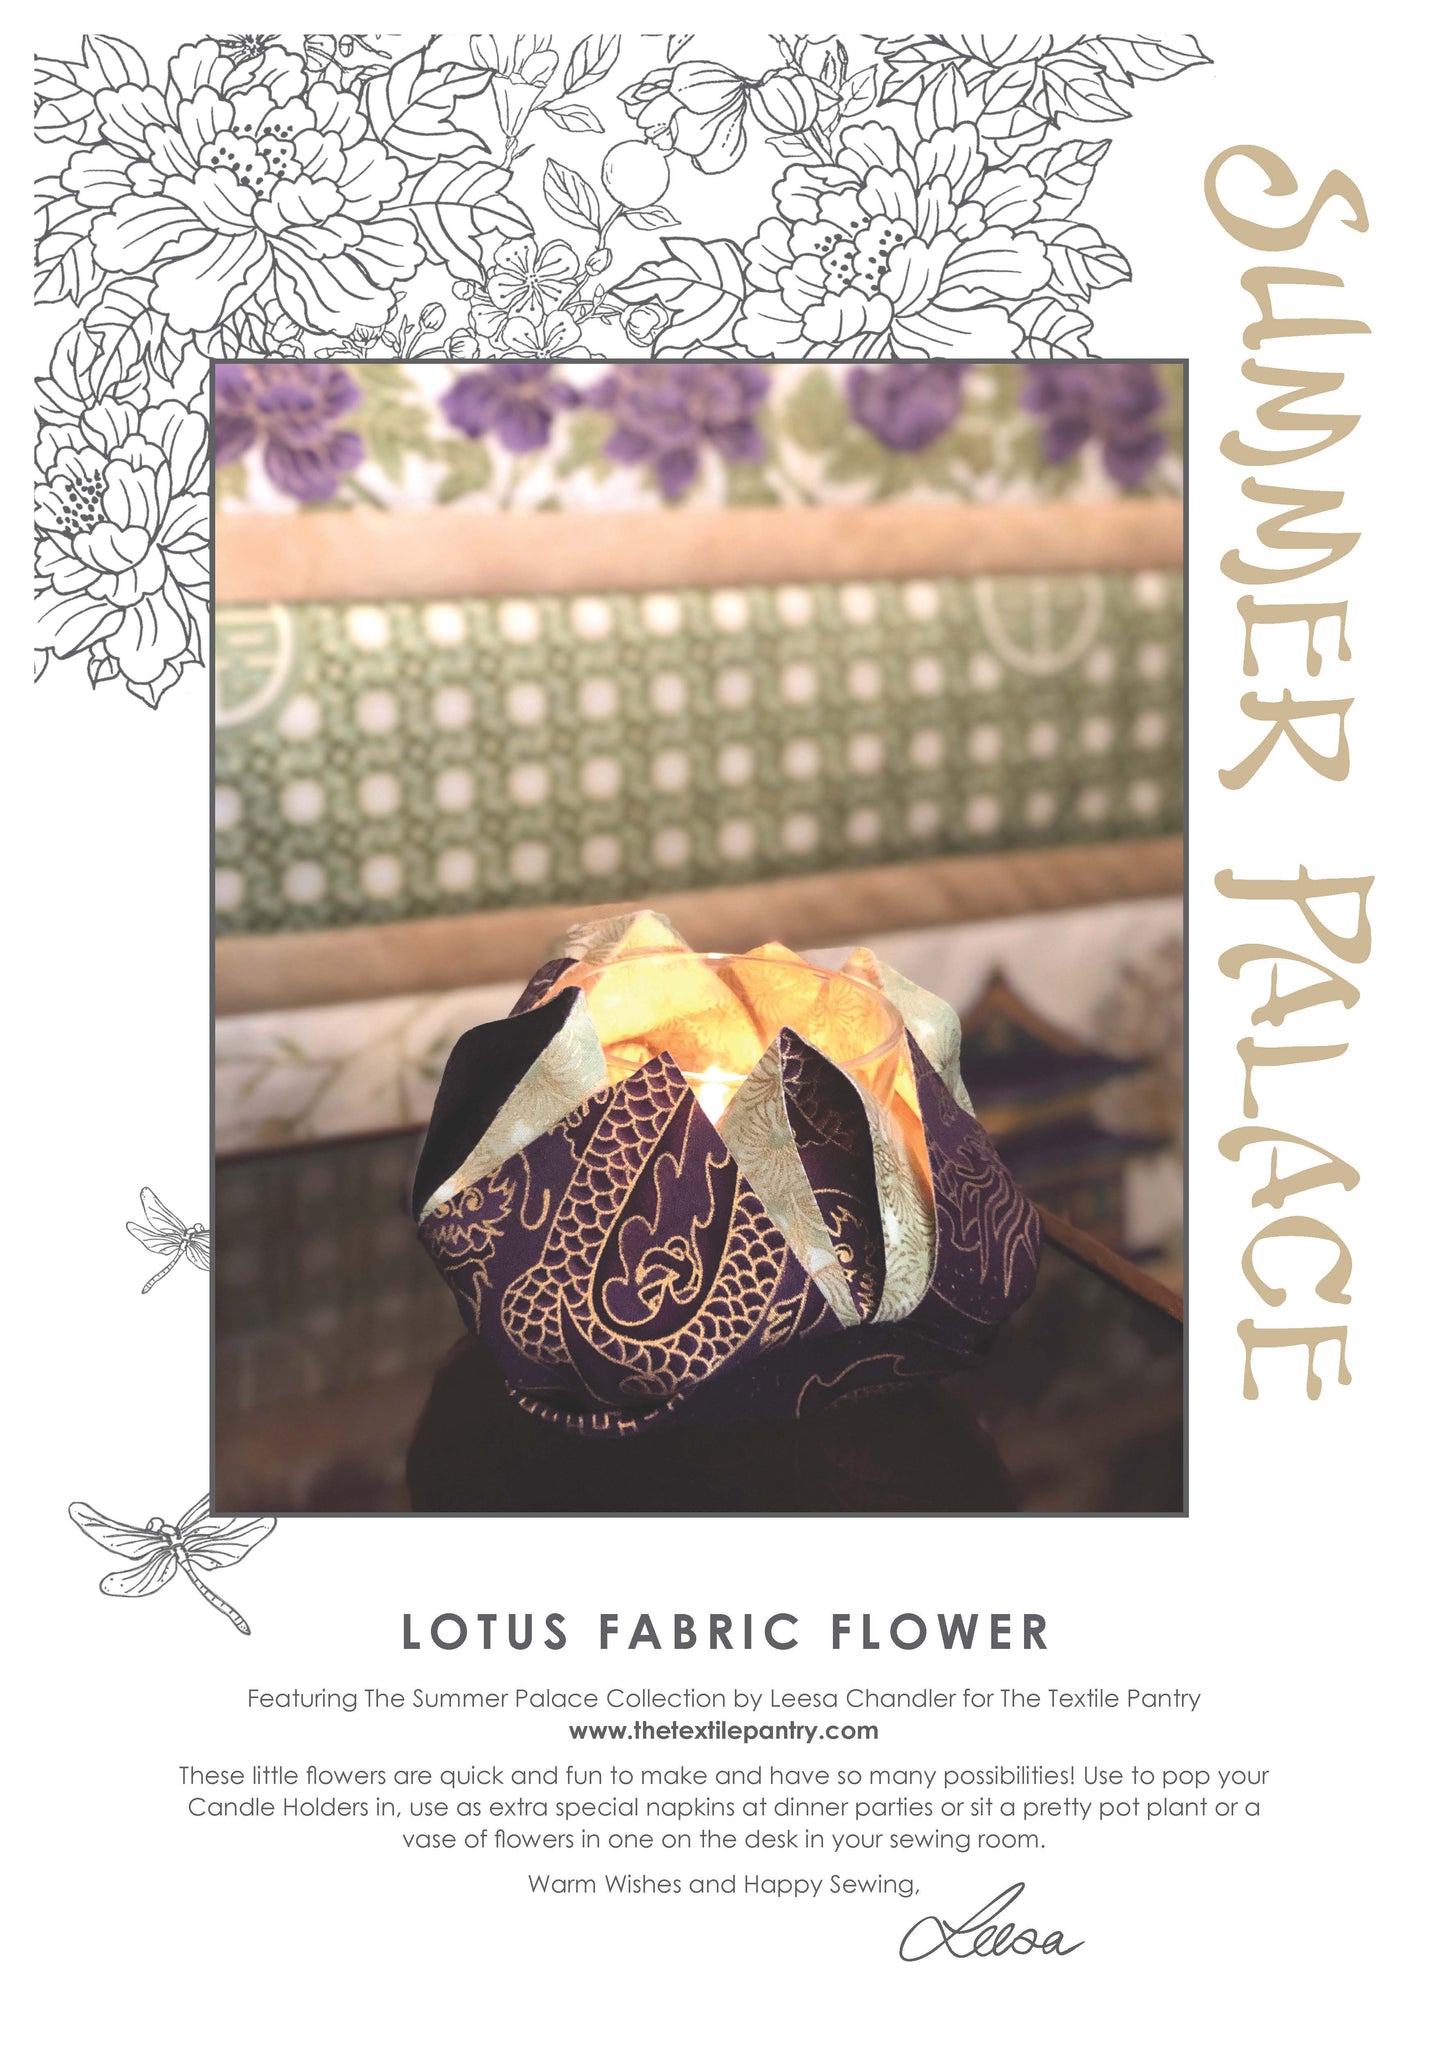 Summer Palace - Lotus Fabric Flower - Free Download